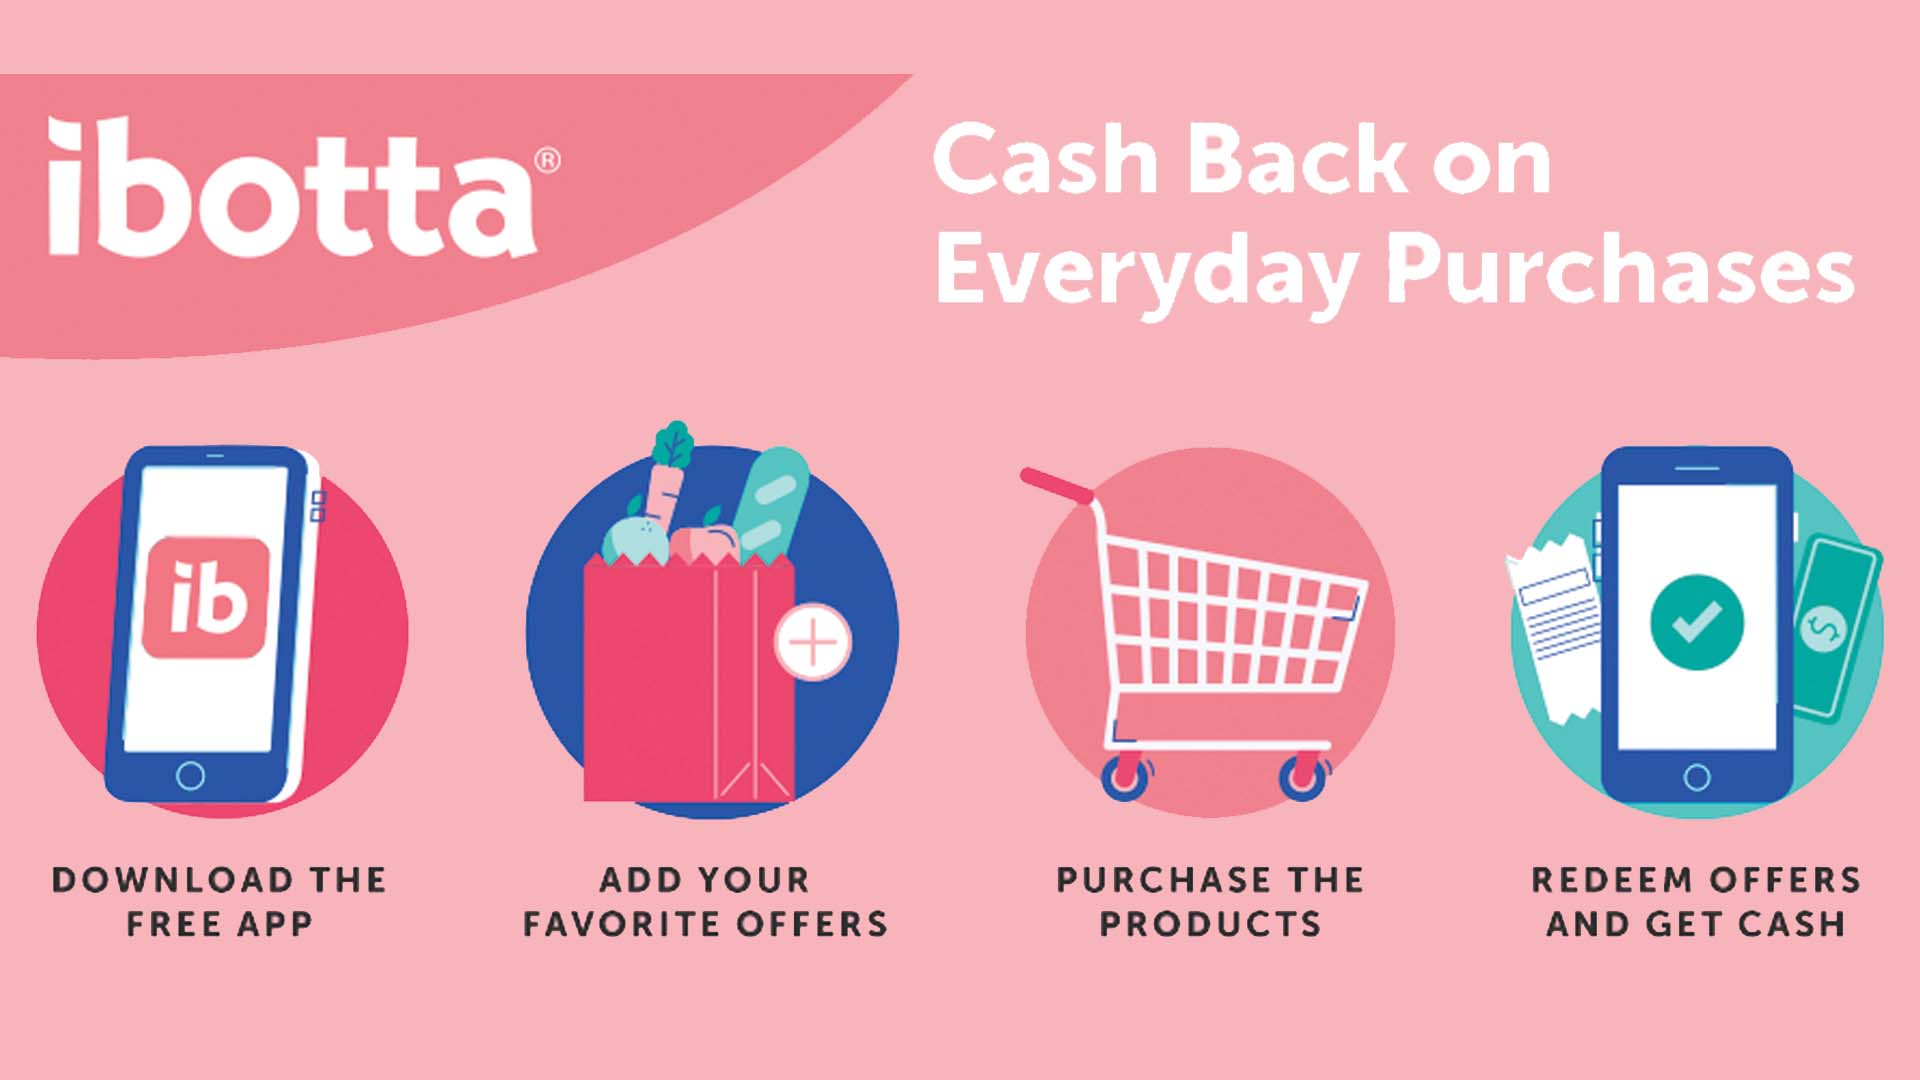 Ibotta digitized cash back program, an innovative tech startup